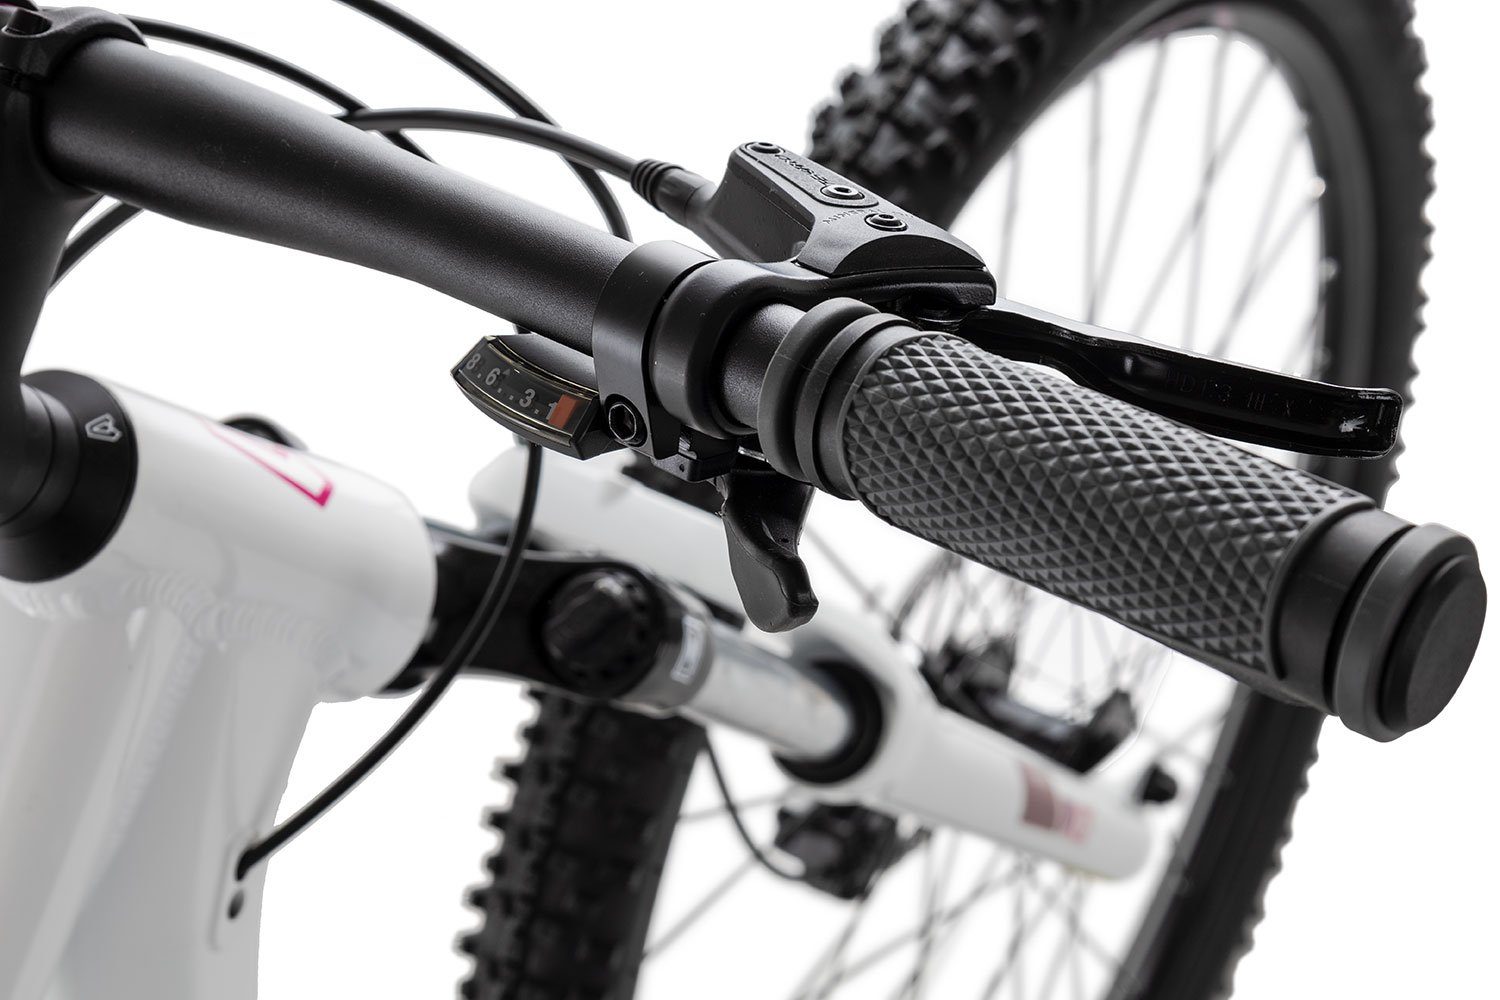 Axess Shimano MTB-Hardtail 2022, Mountainbike Schaltwerk, DOREE weiß 24 white/red/purple Kettenschaltung, RD-TX800-8 Gang Tourney